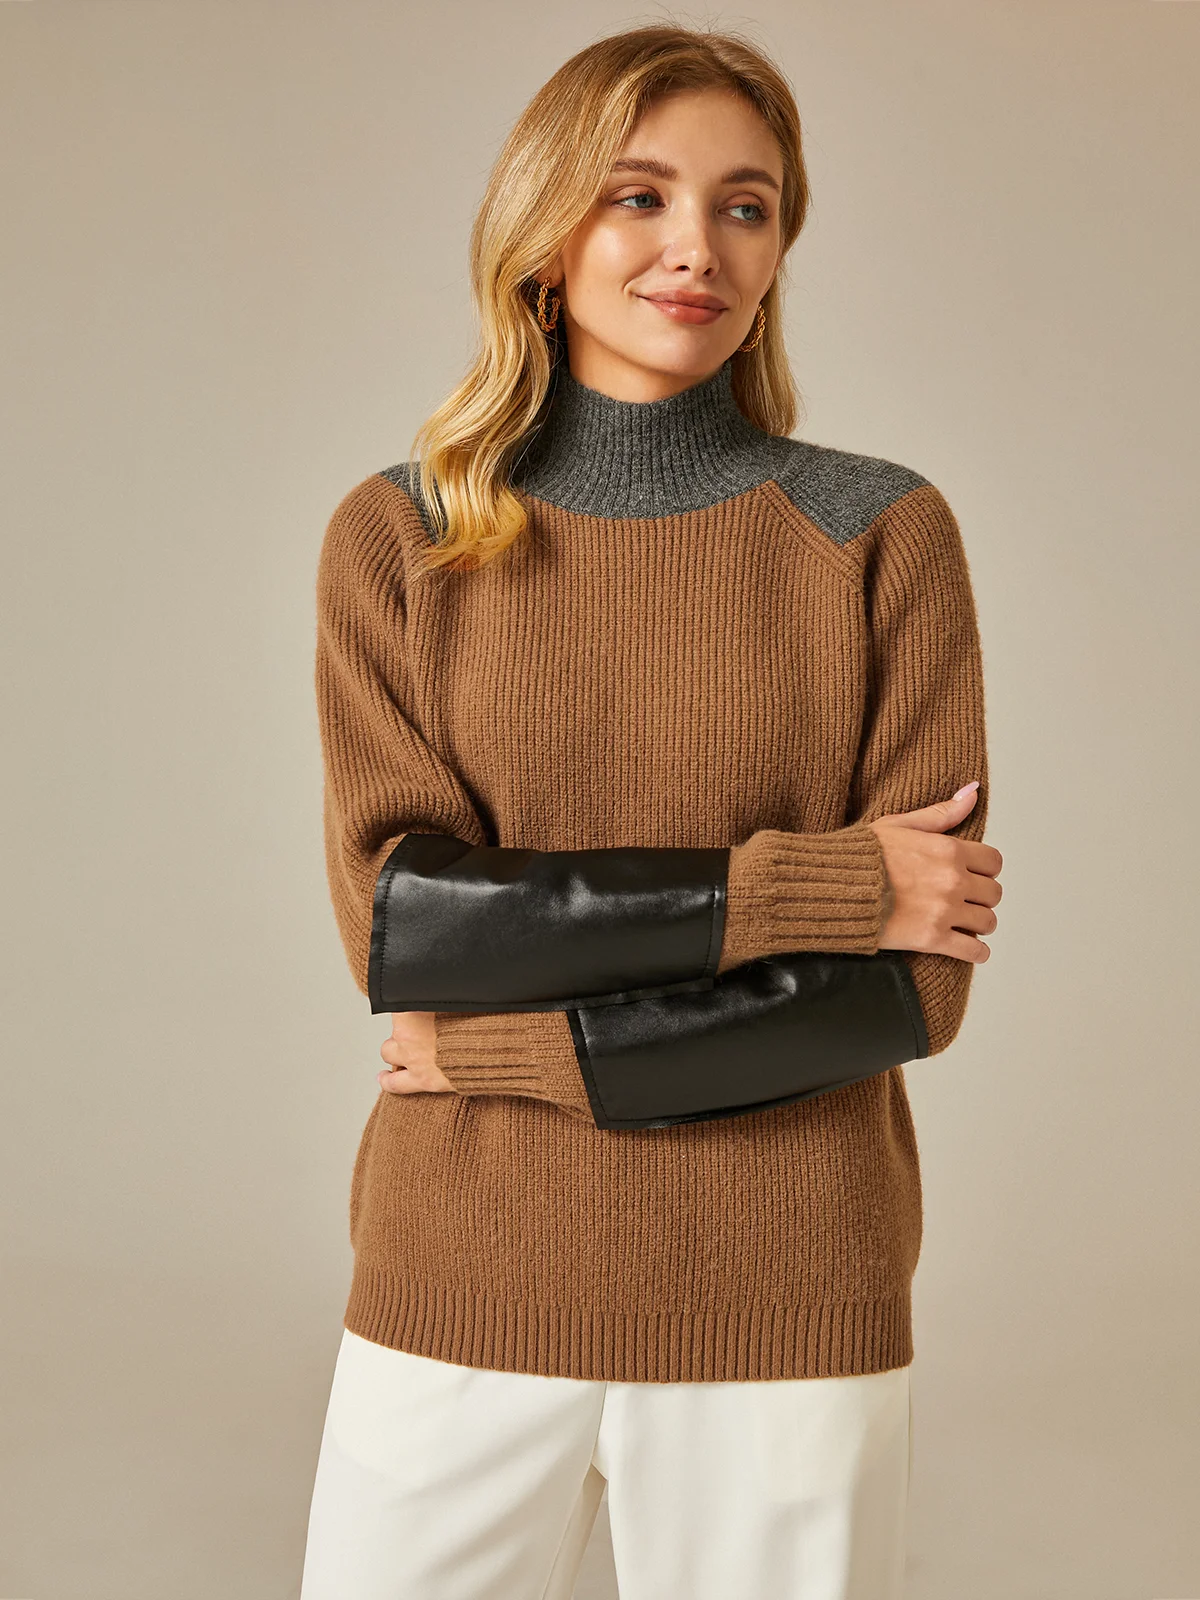 Turtleneck Urban Loose Long Sleeve Sweater